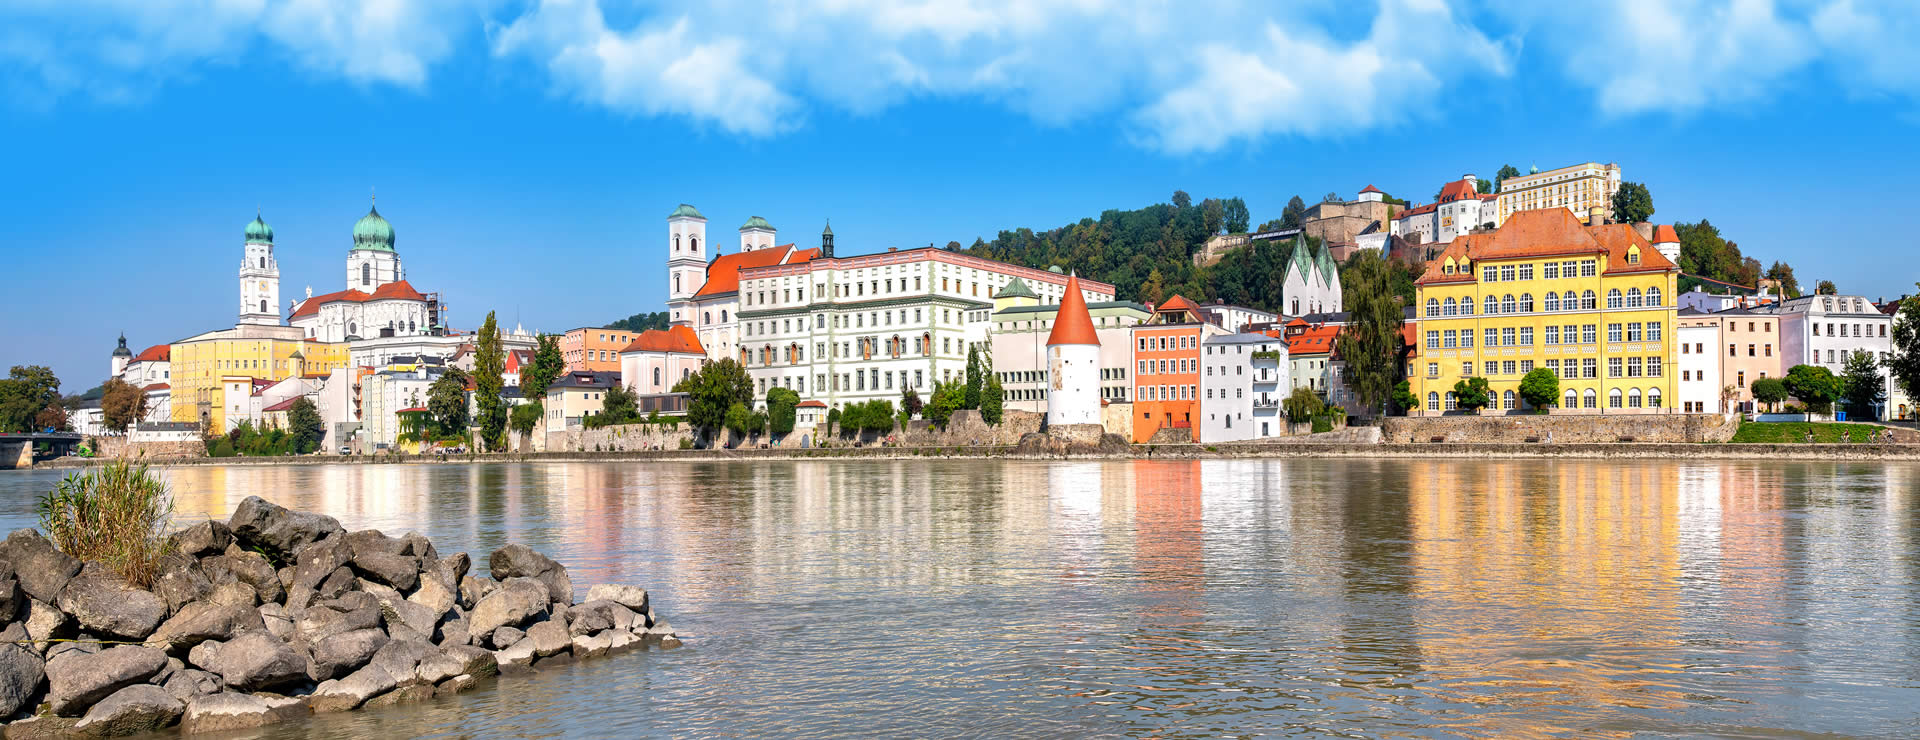 Passau city and river